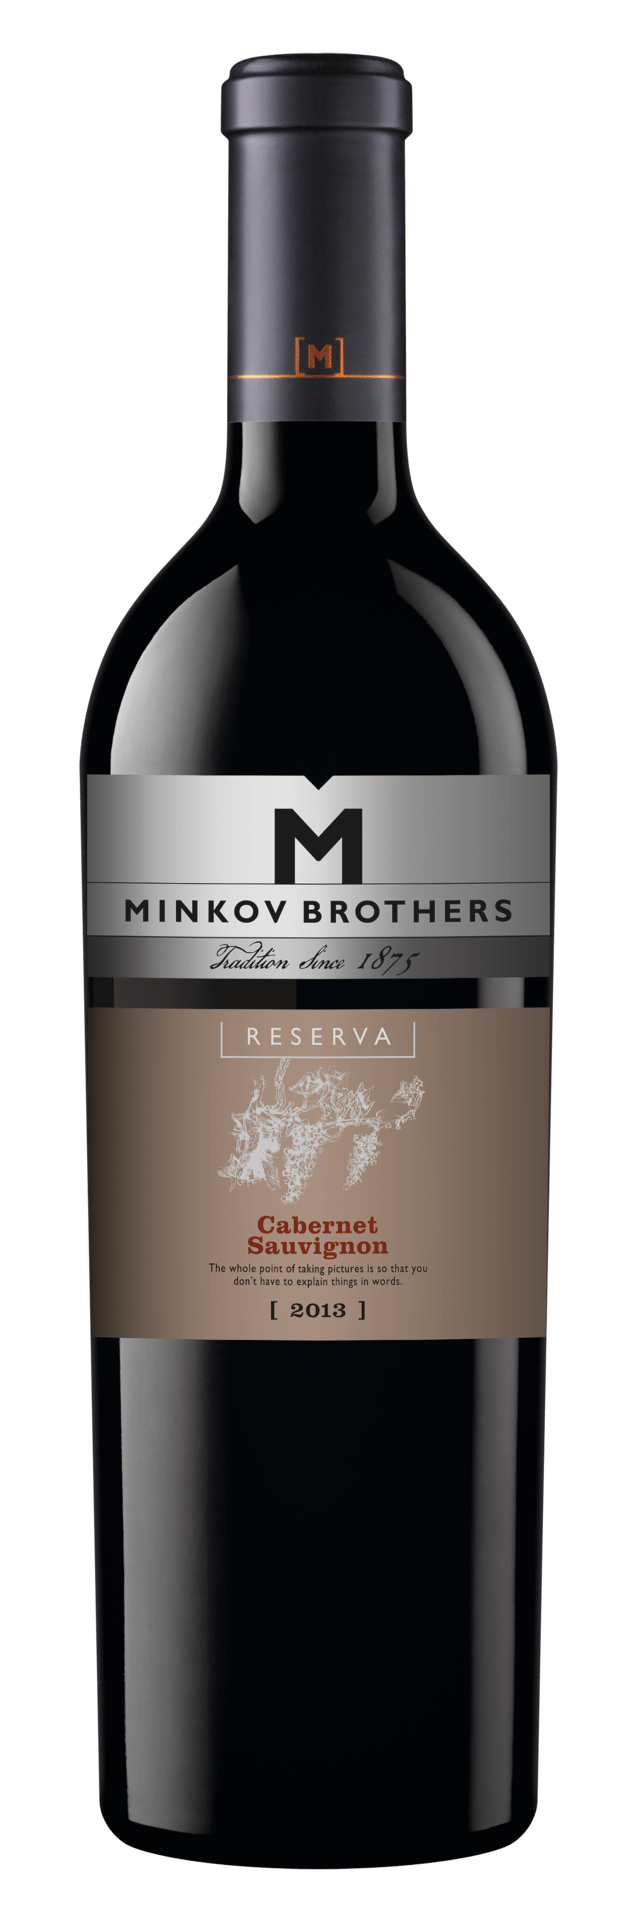 MINKOV BROTHERS RESERVA Cabernet Sauvignon